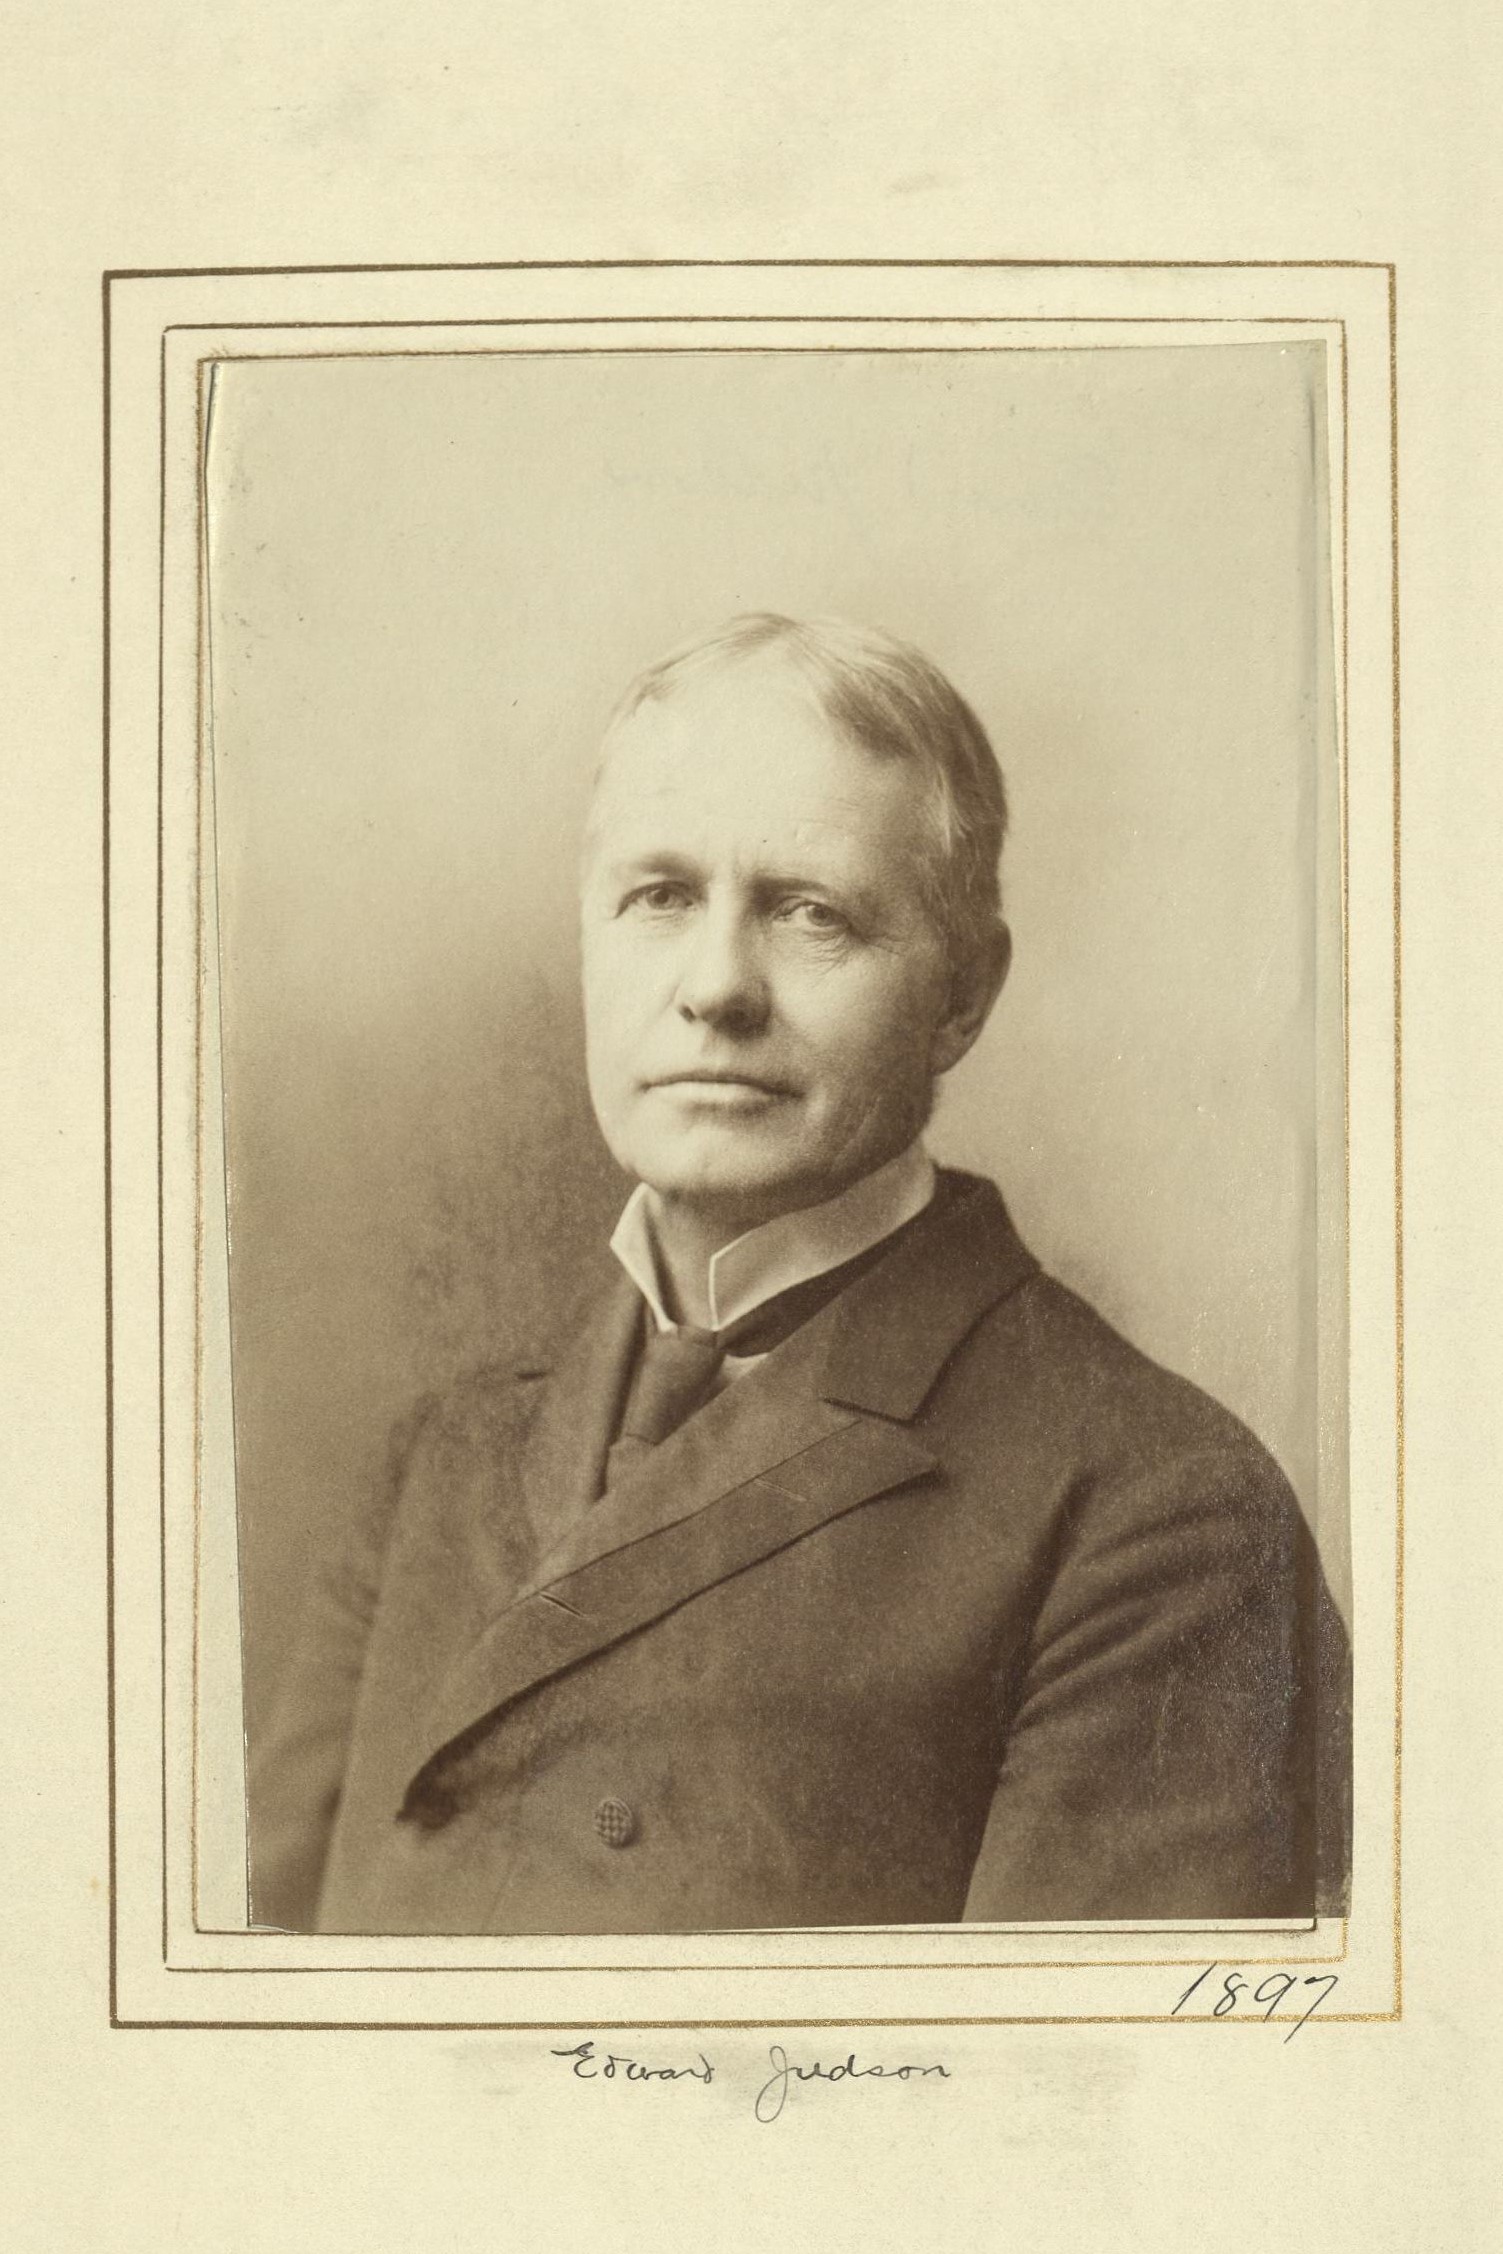 Member portrait of Edward Judson